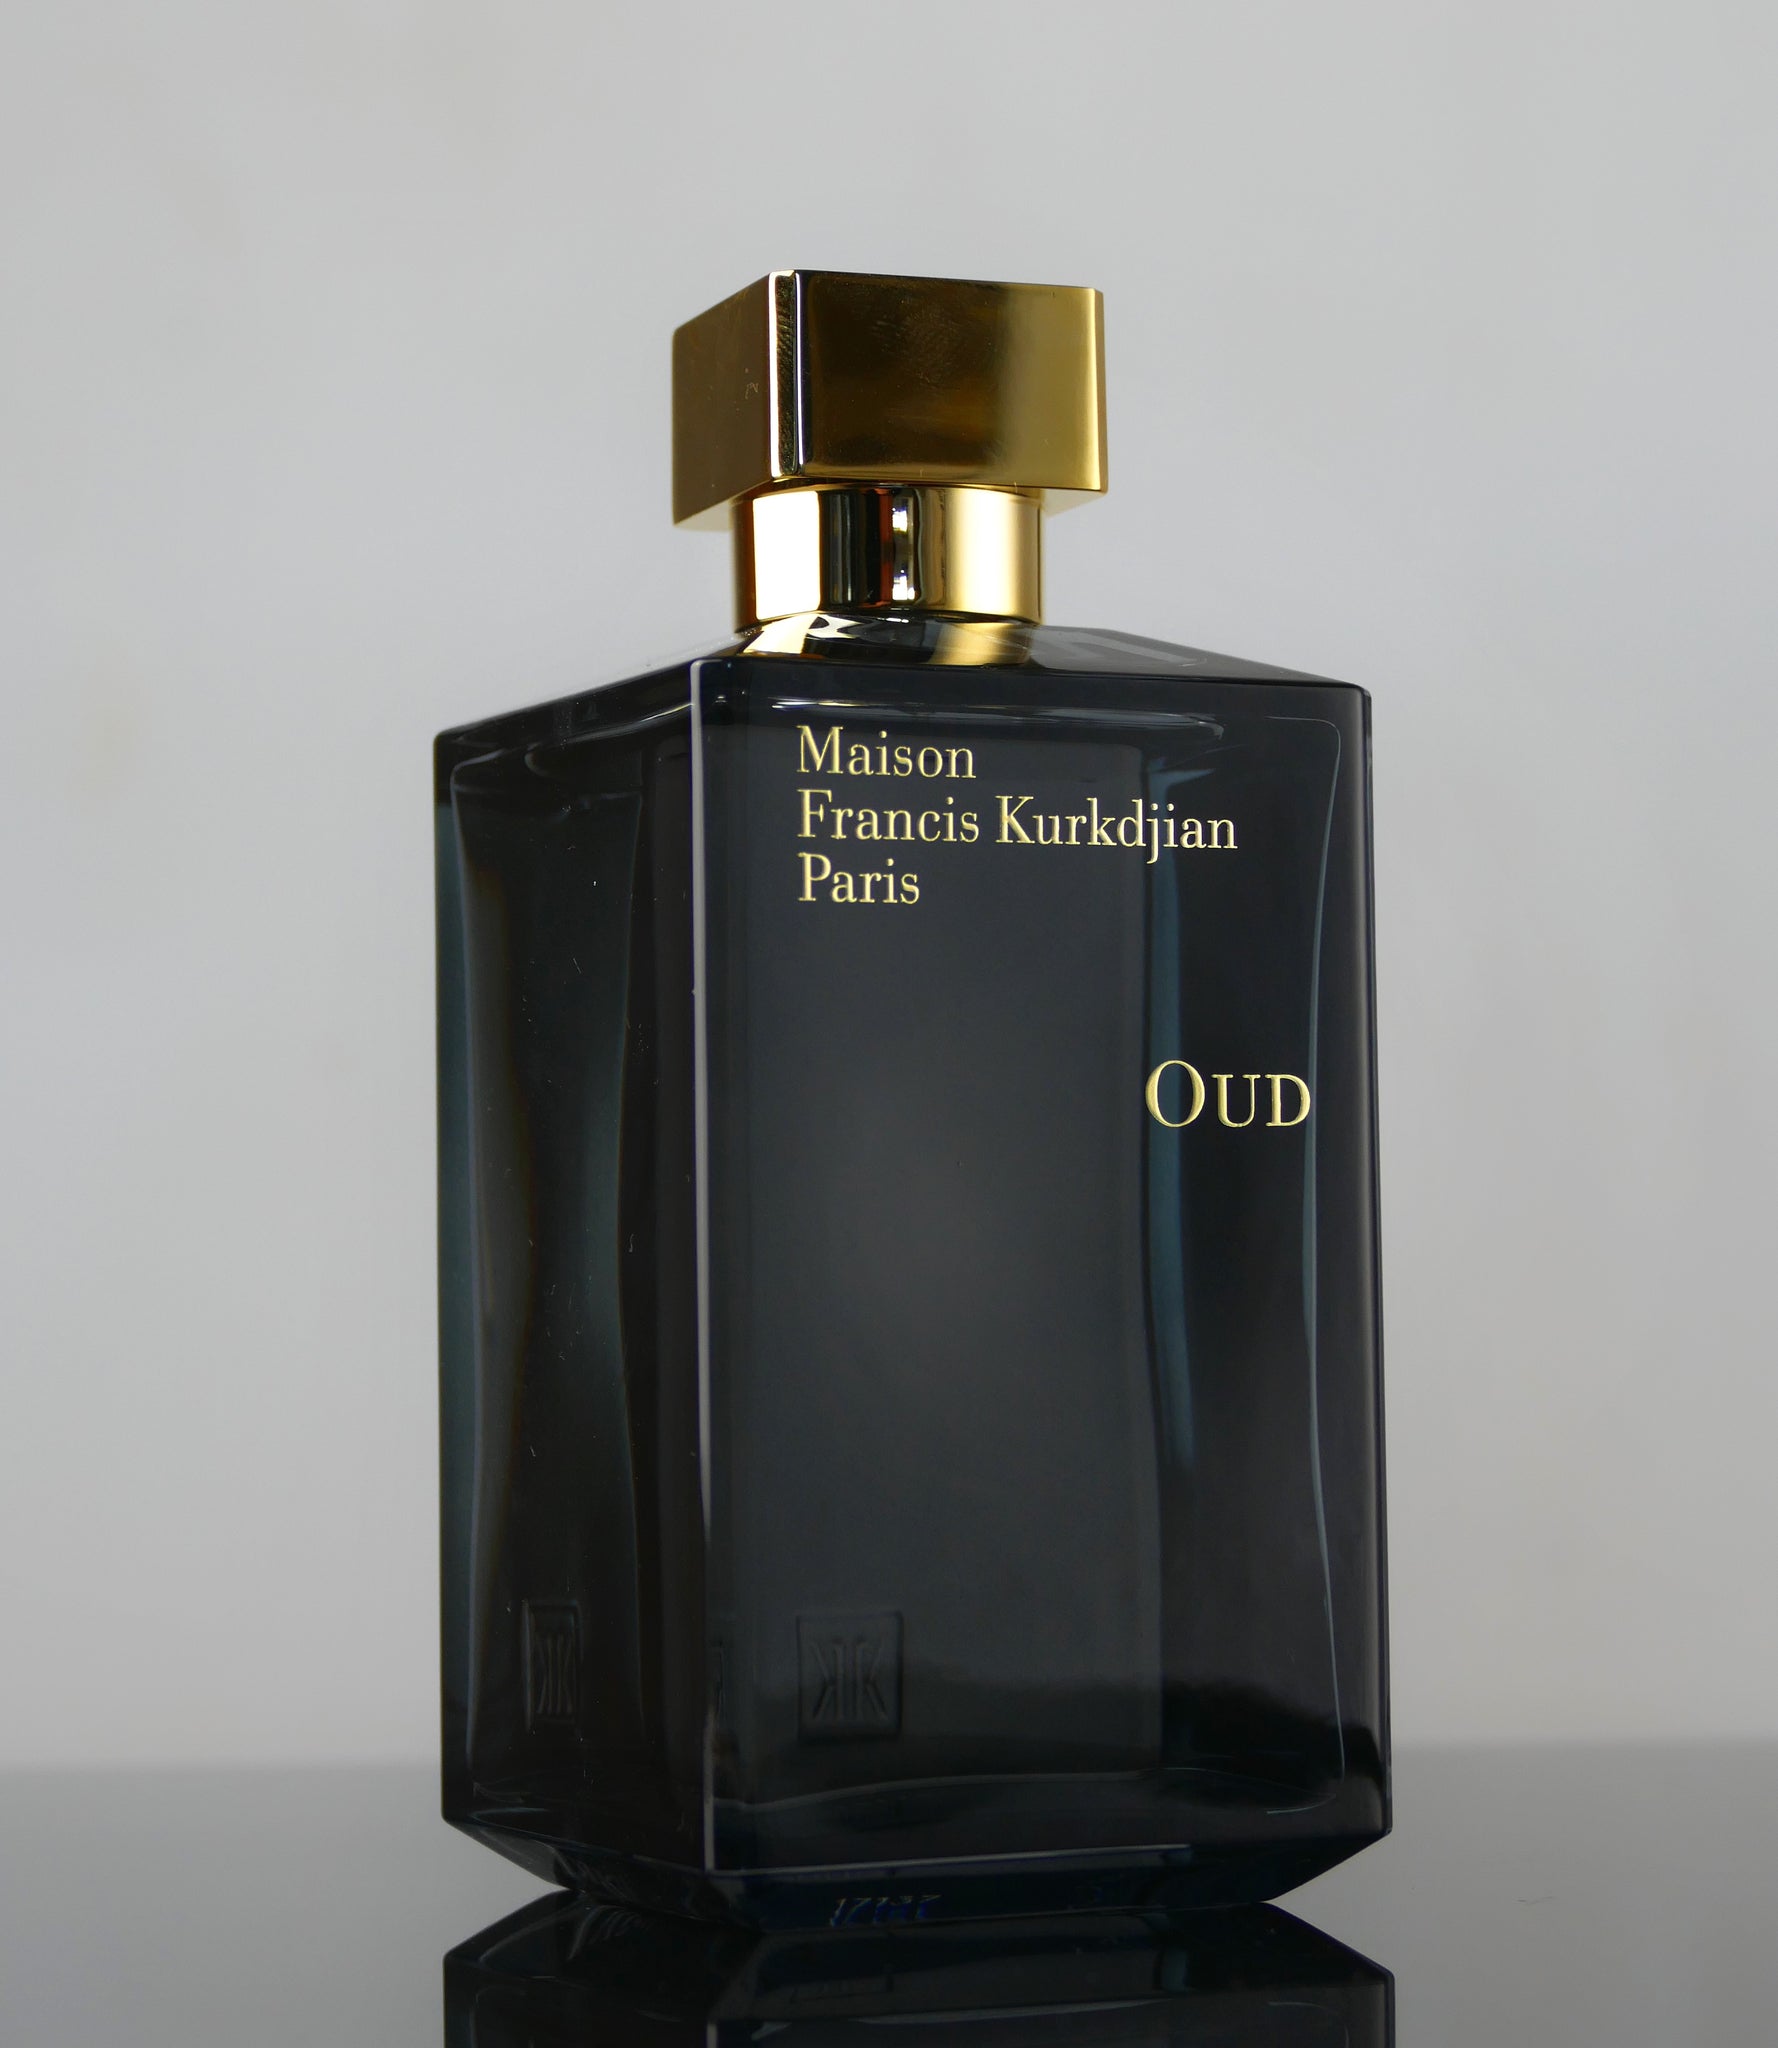 Maison Francis Kurkdjian Oud, Perfume Sample